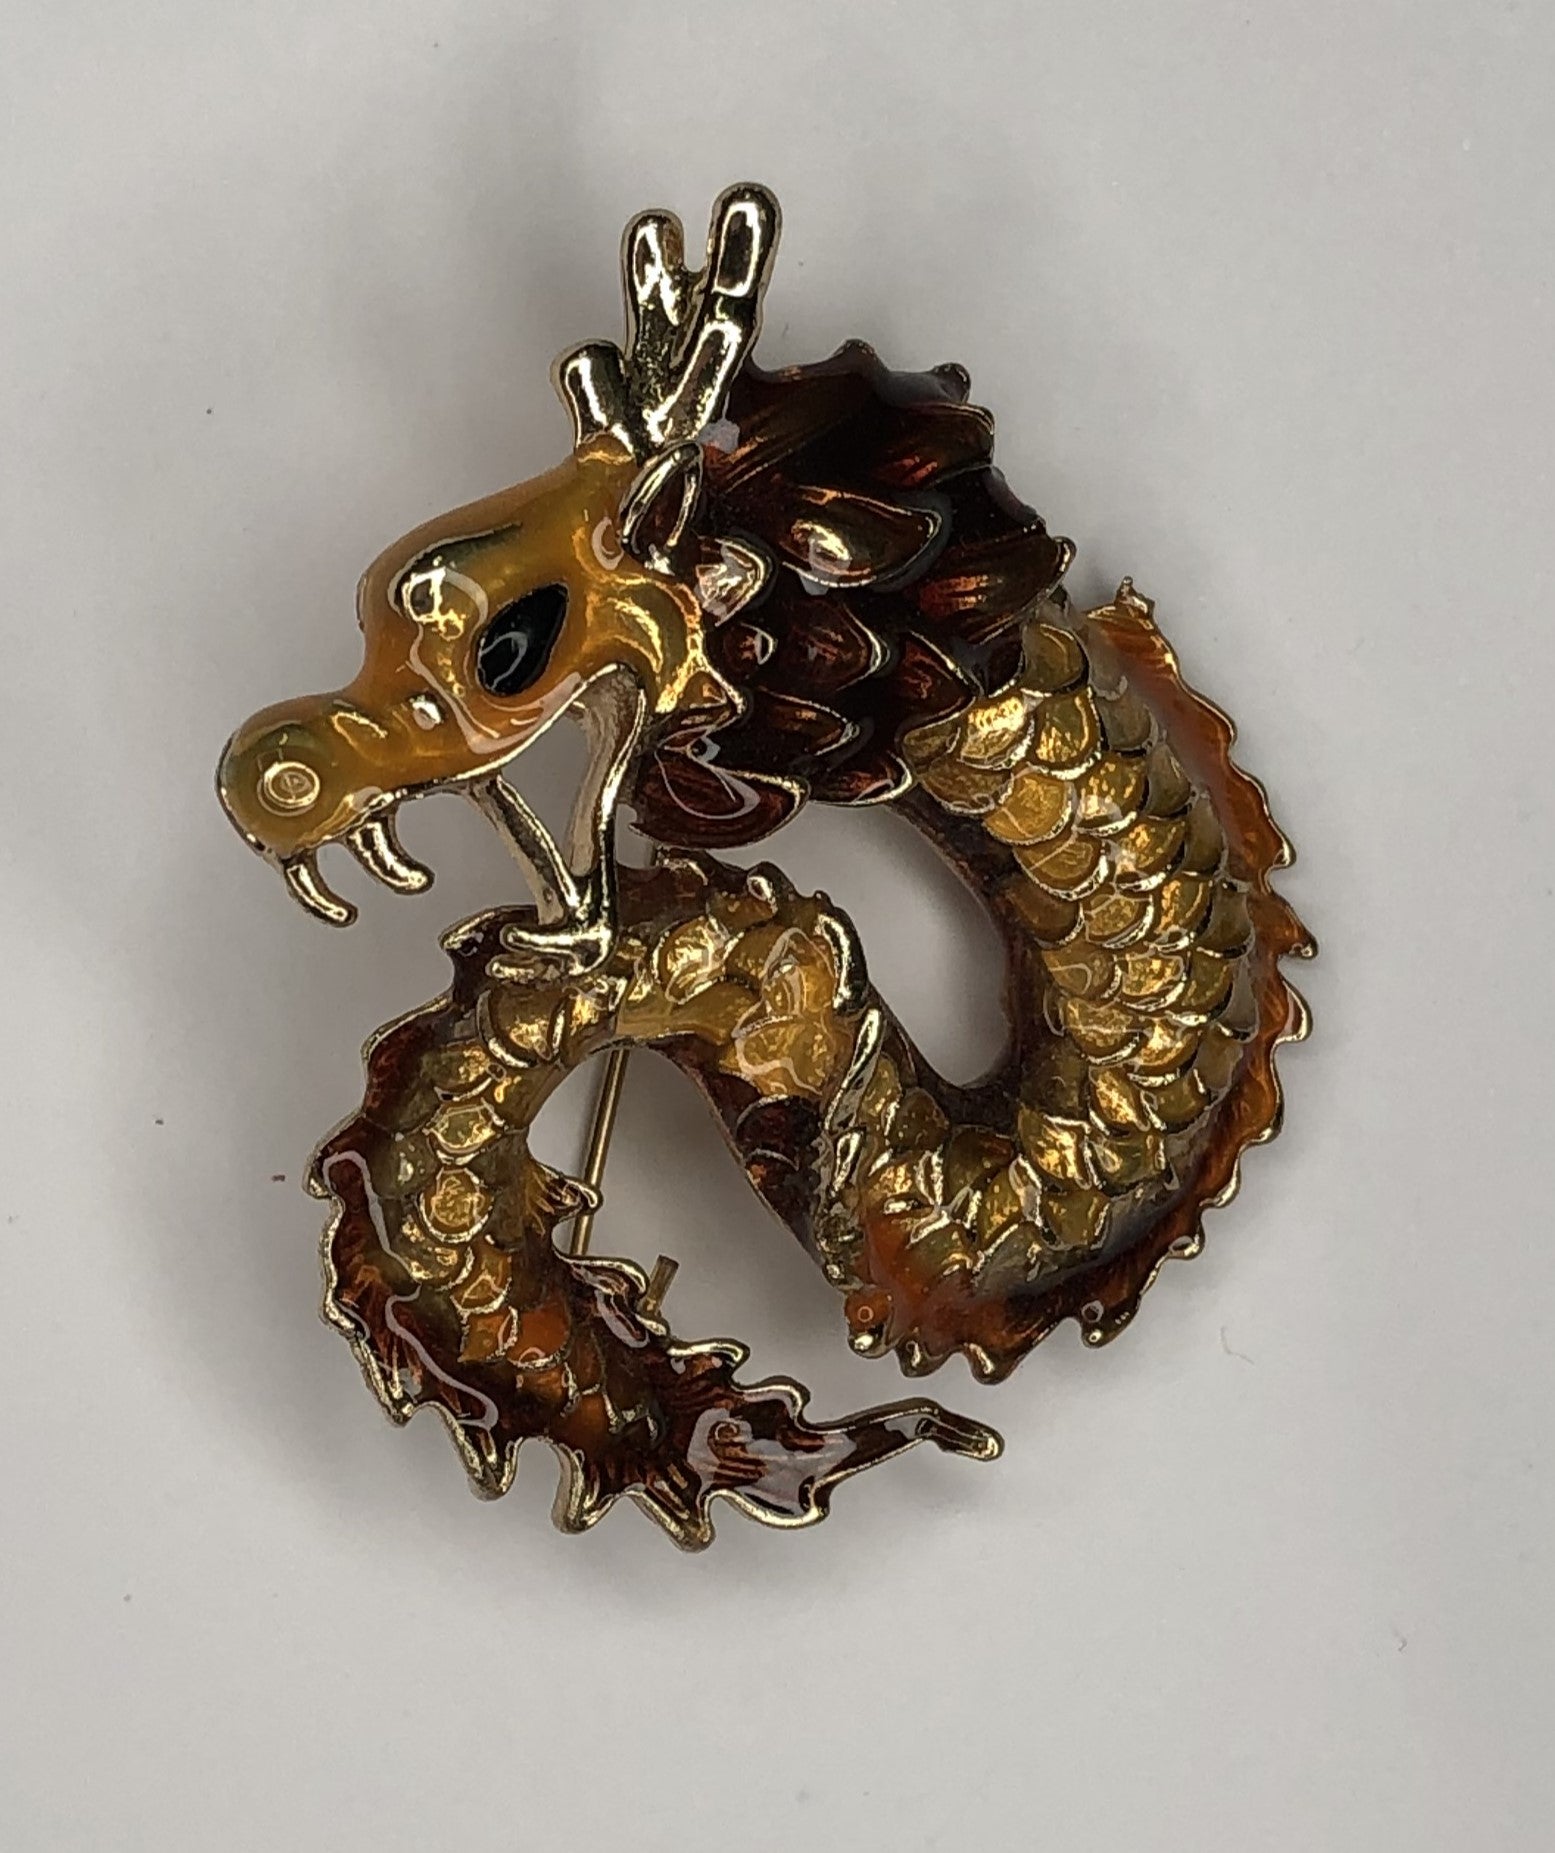 Brown and gold enameled dragon brooch at erika